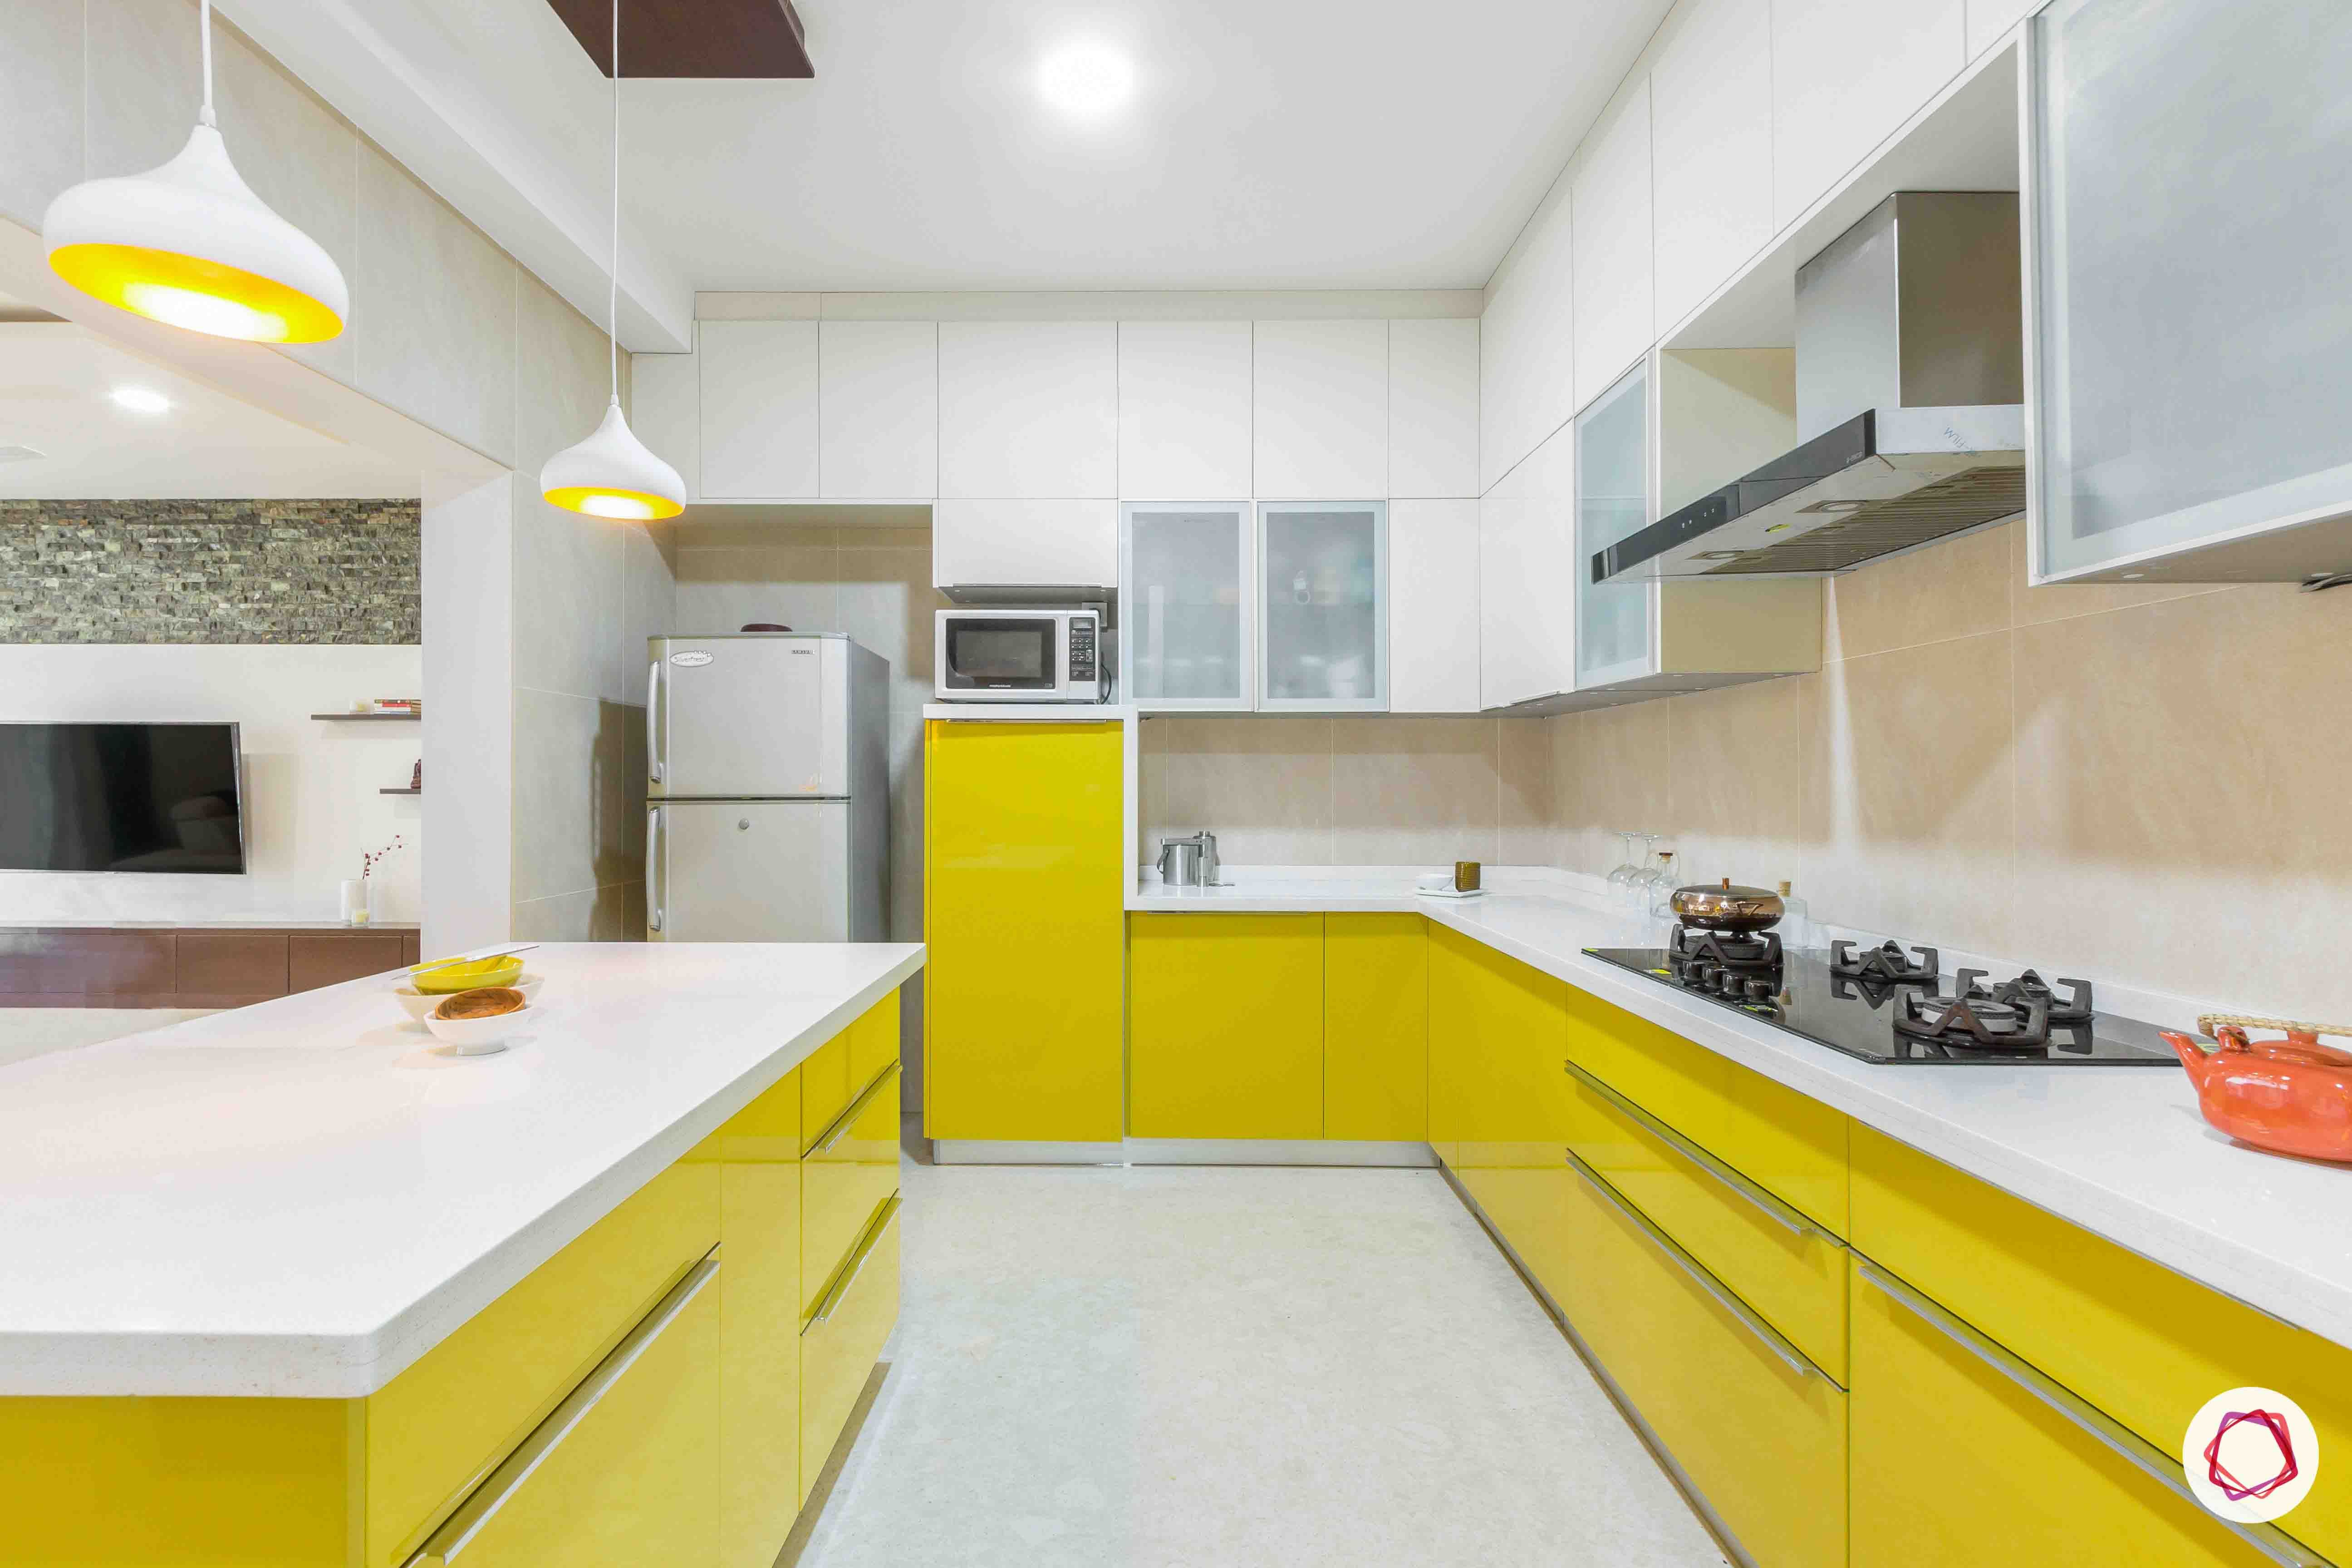 sobha forest view-modular kitchen design-yellow cabinets-lofts-breakfast counter-pendant lights